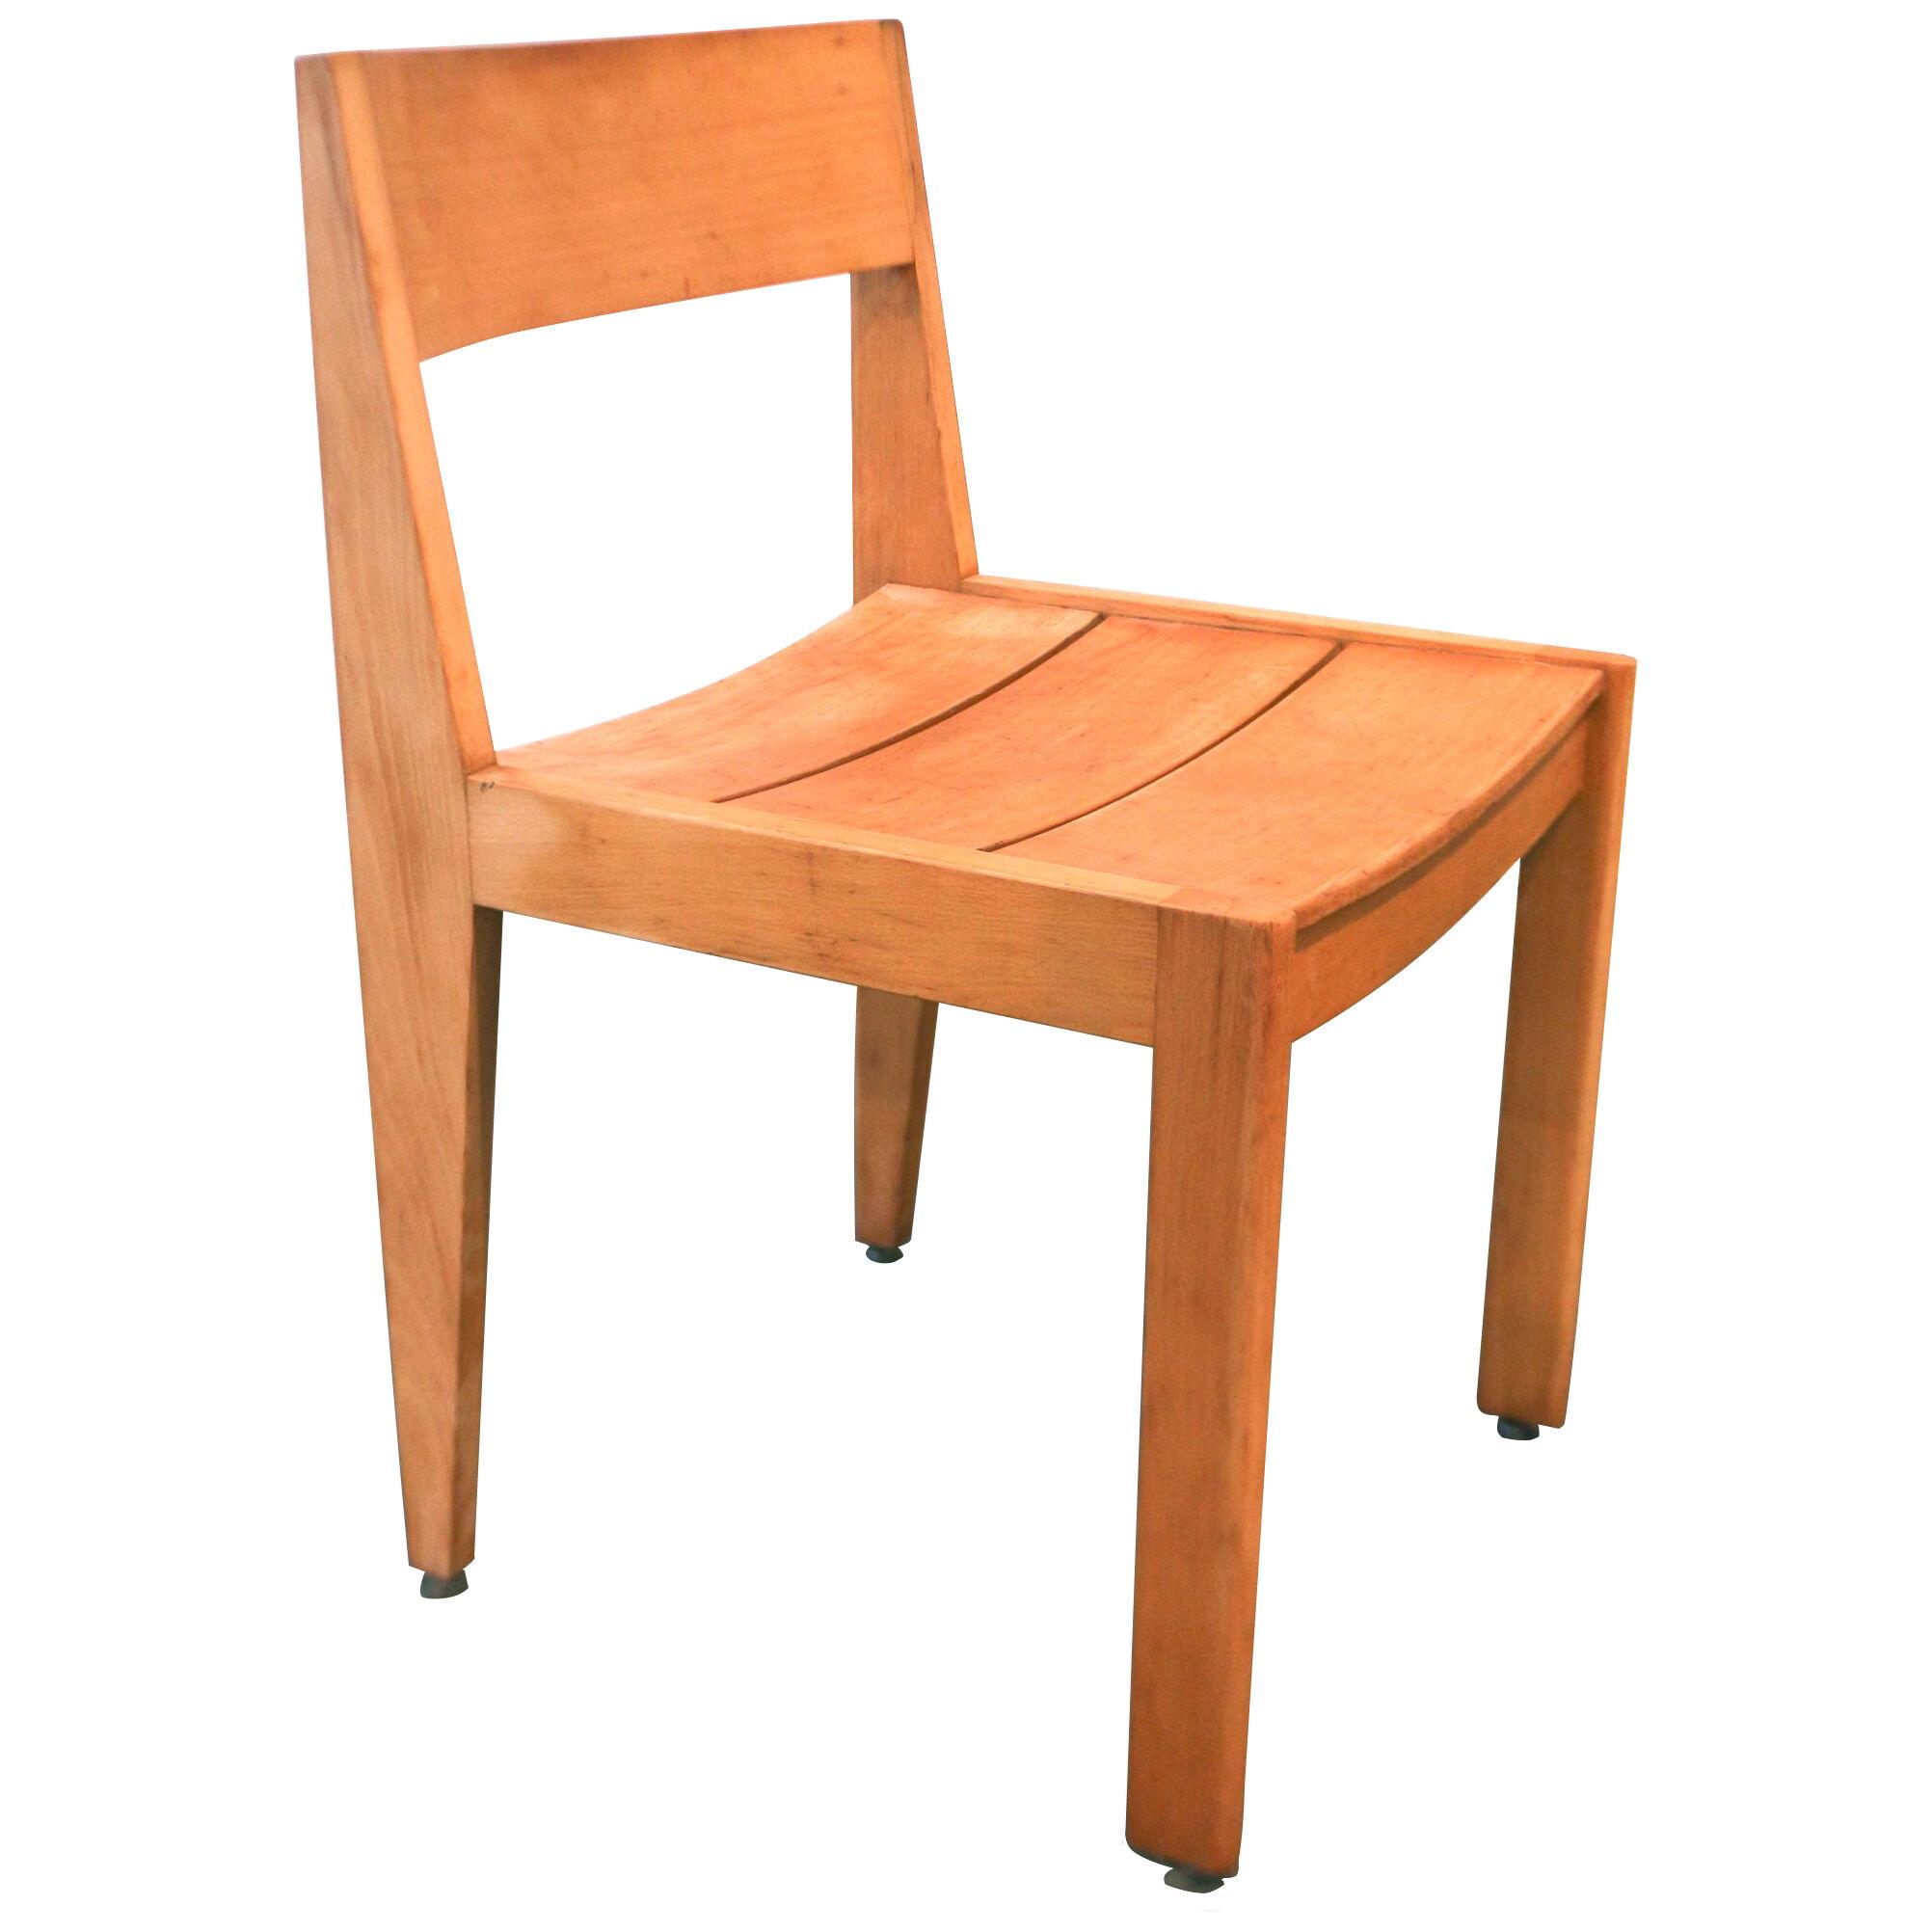 1954. chair 266 by Martha Huber-Villiger 